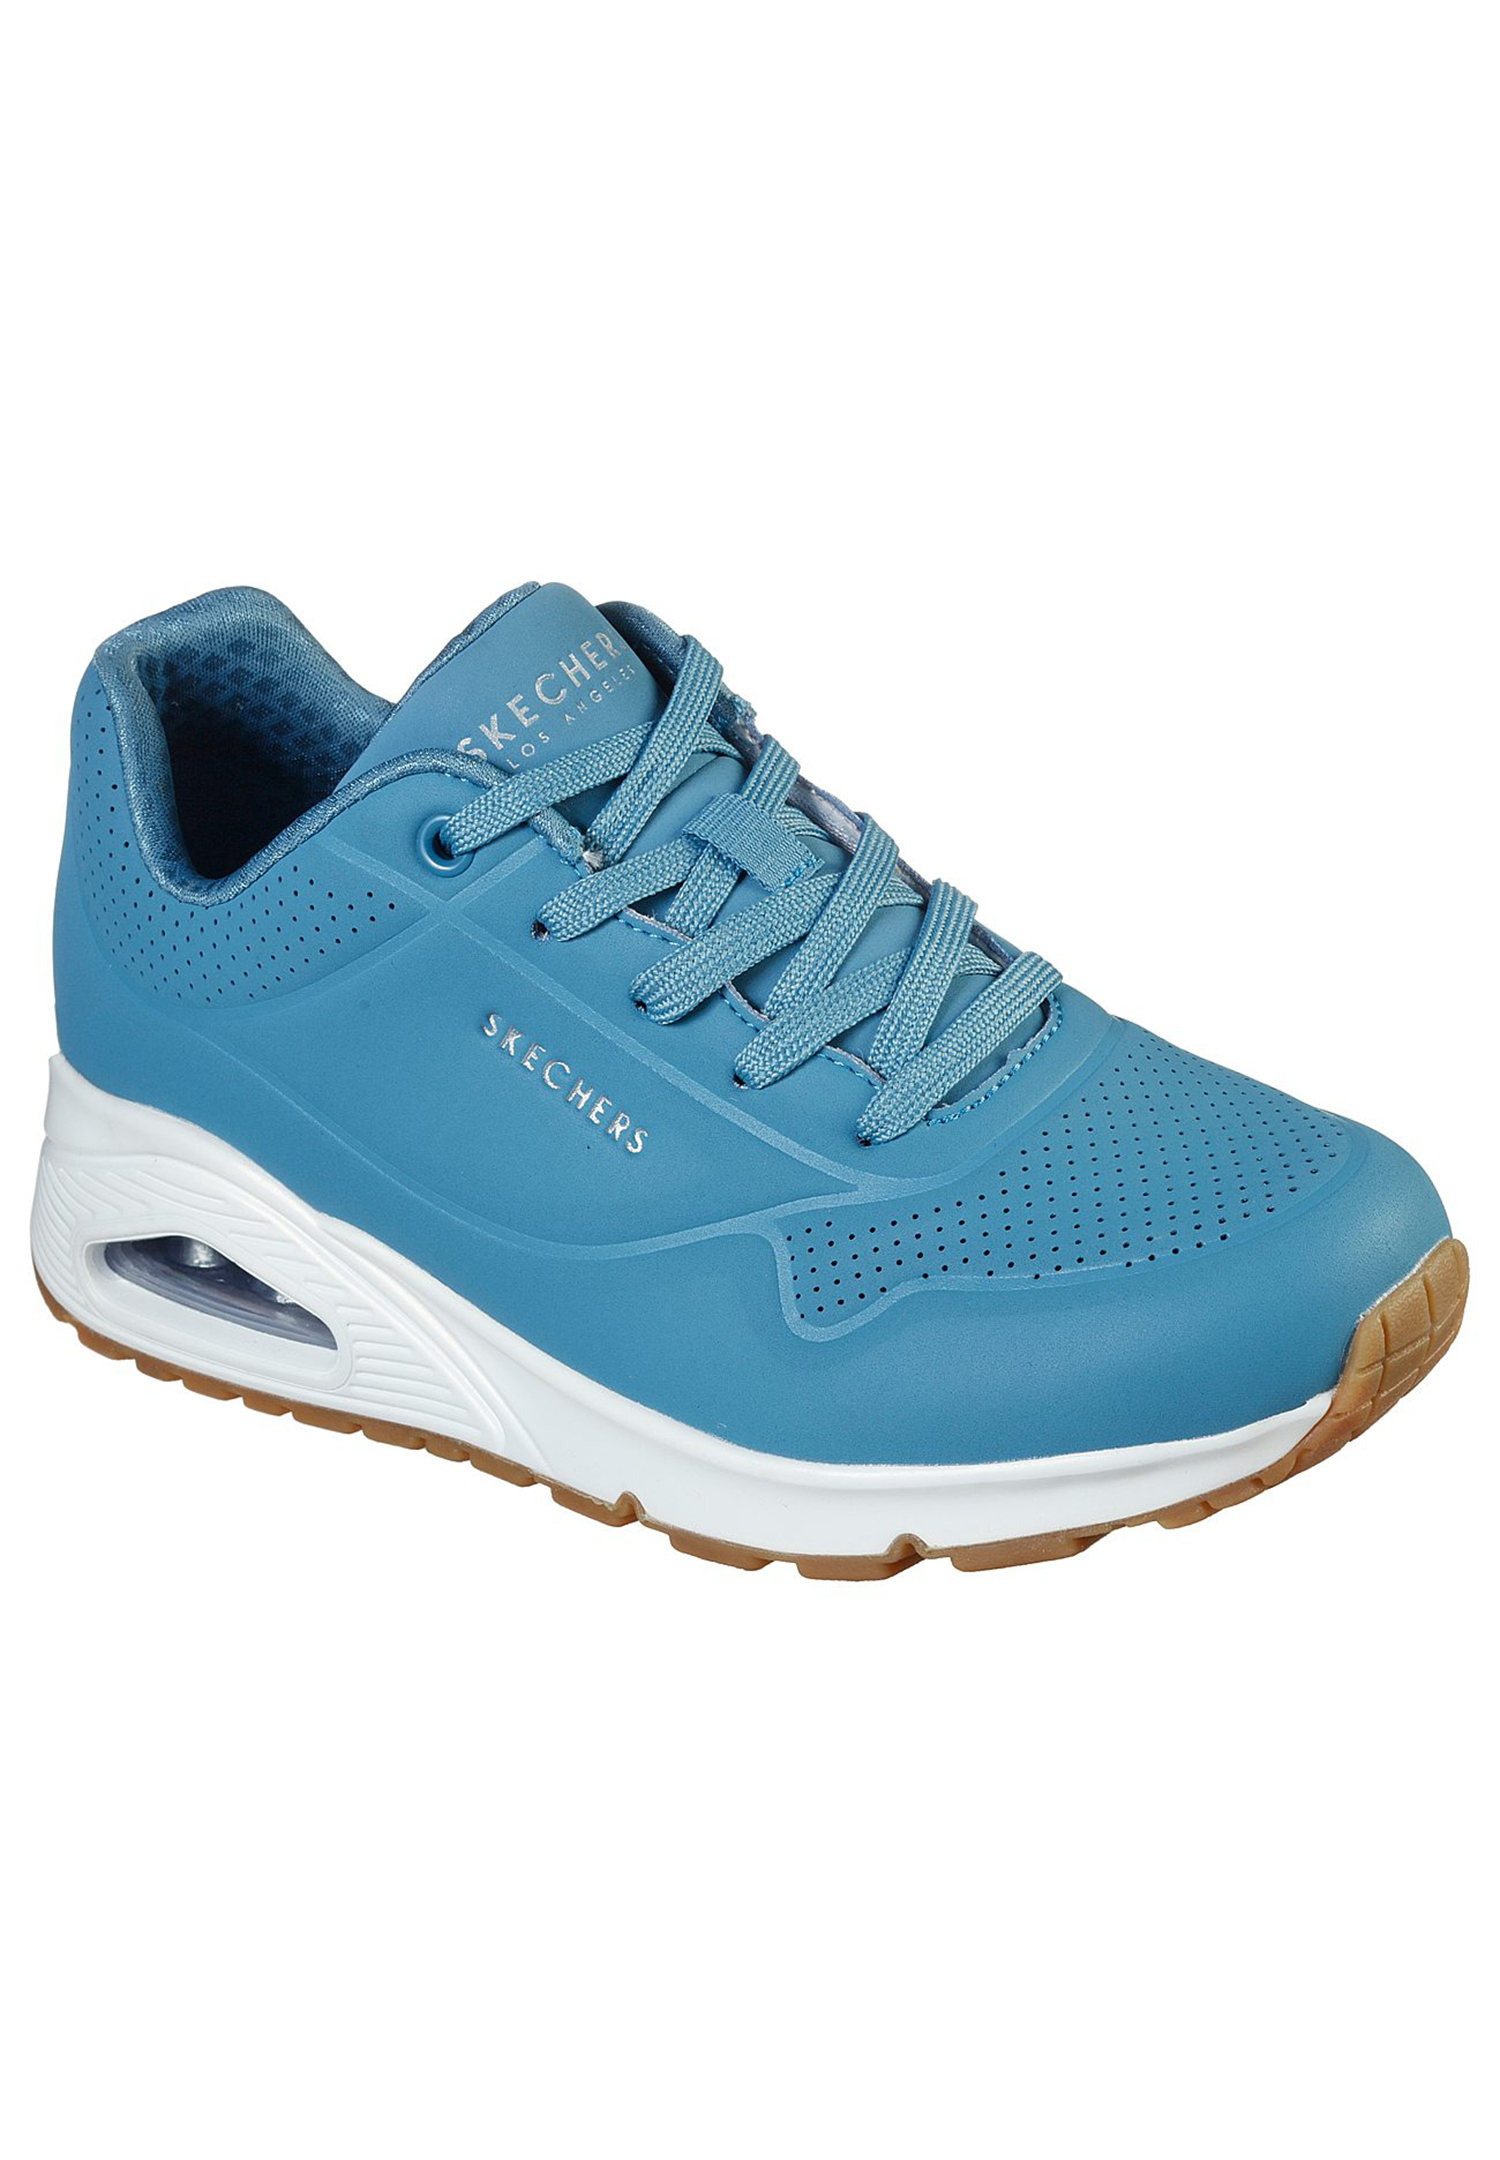 Skecher Street Uno -STAND ON AIR Damen Sneaker 73690 SLT blau